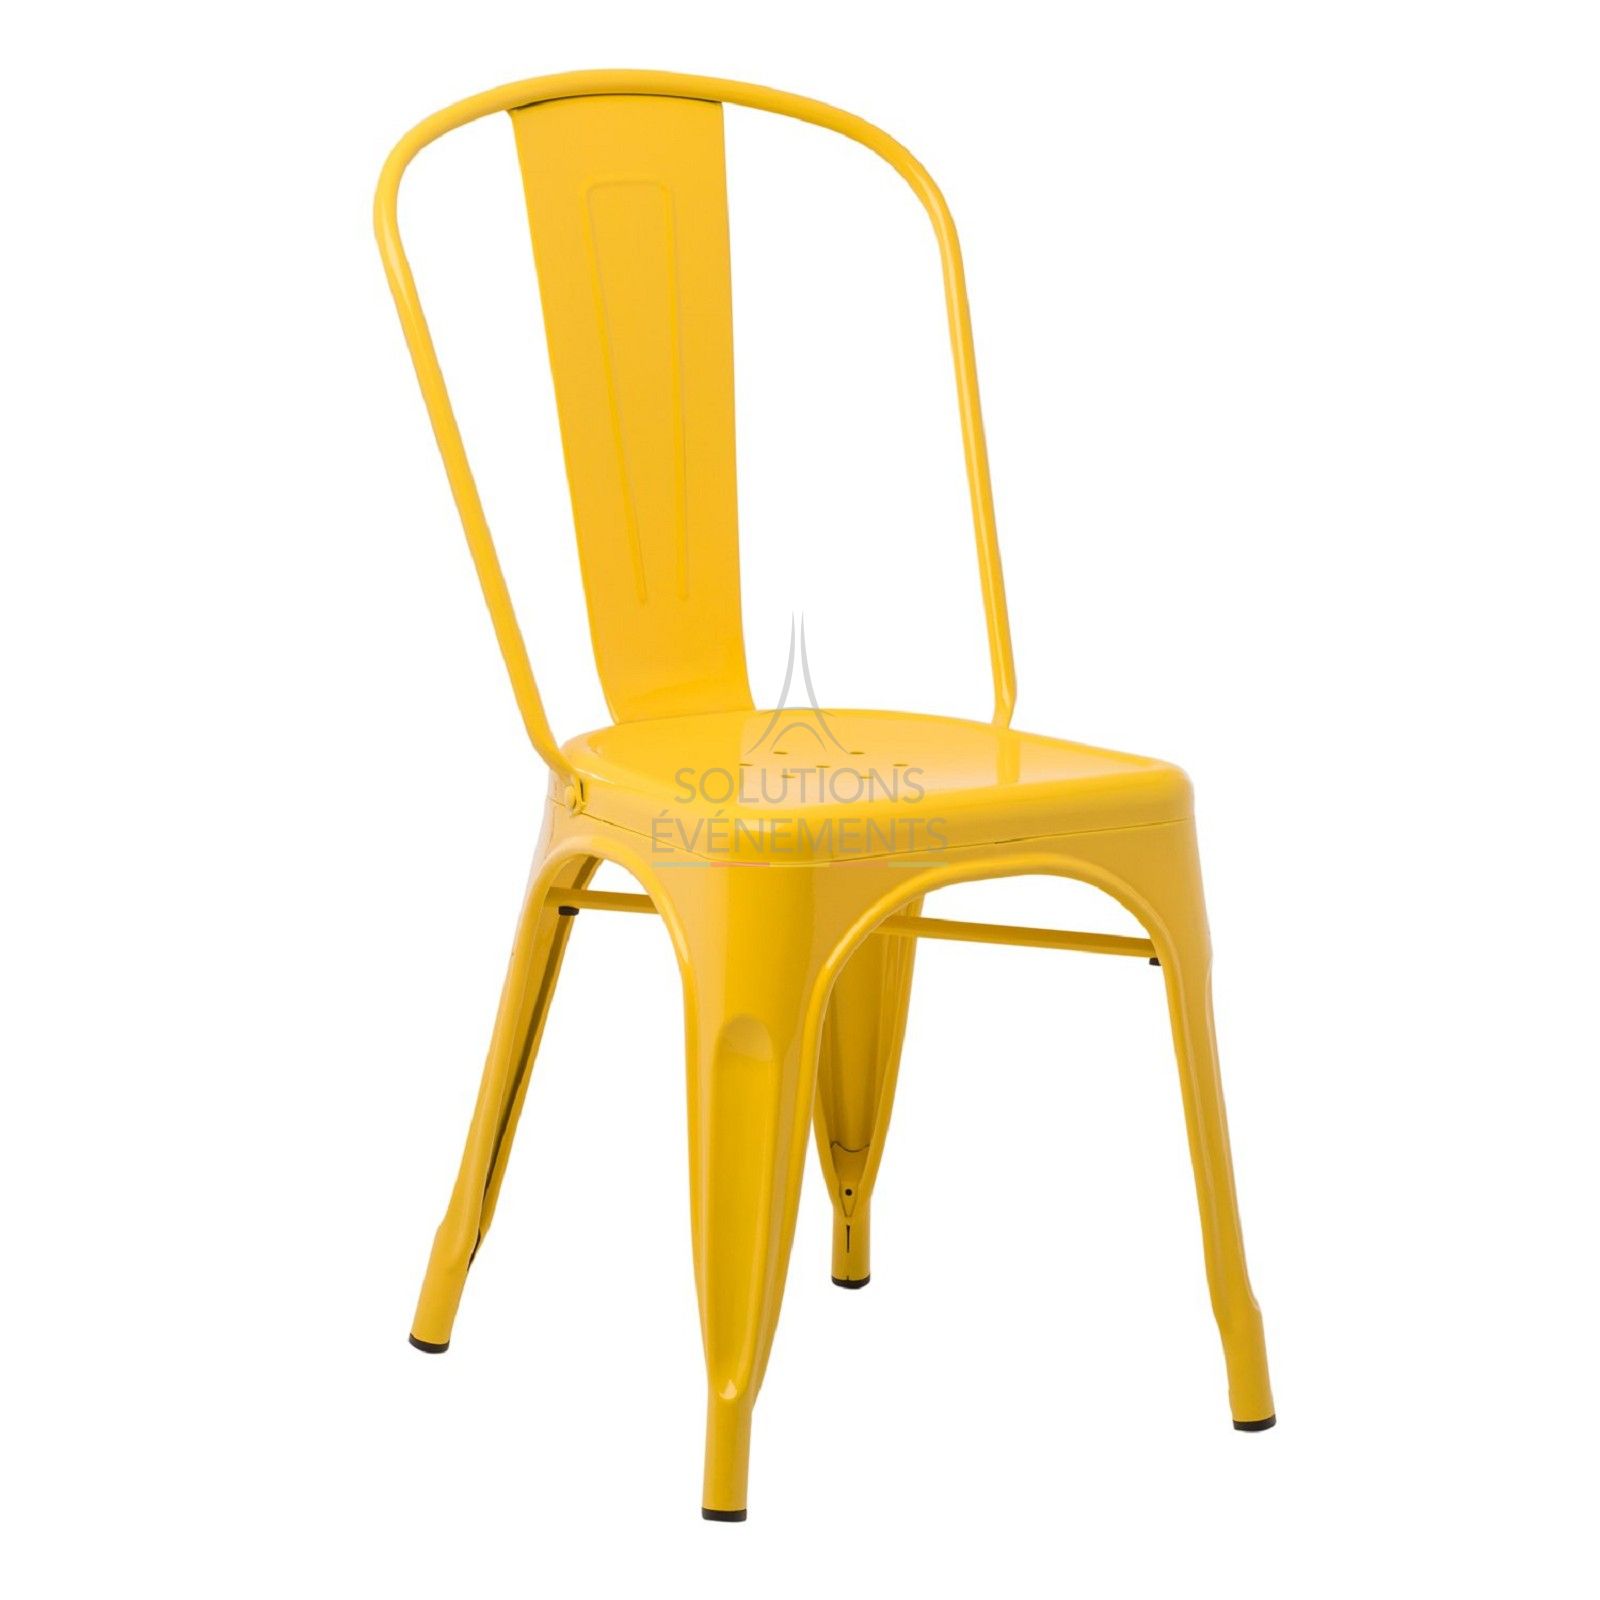 Rental of industrial yellow metal chair